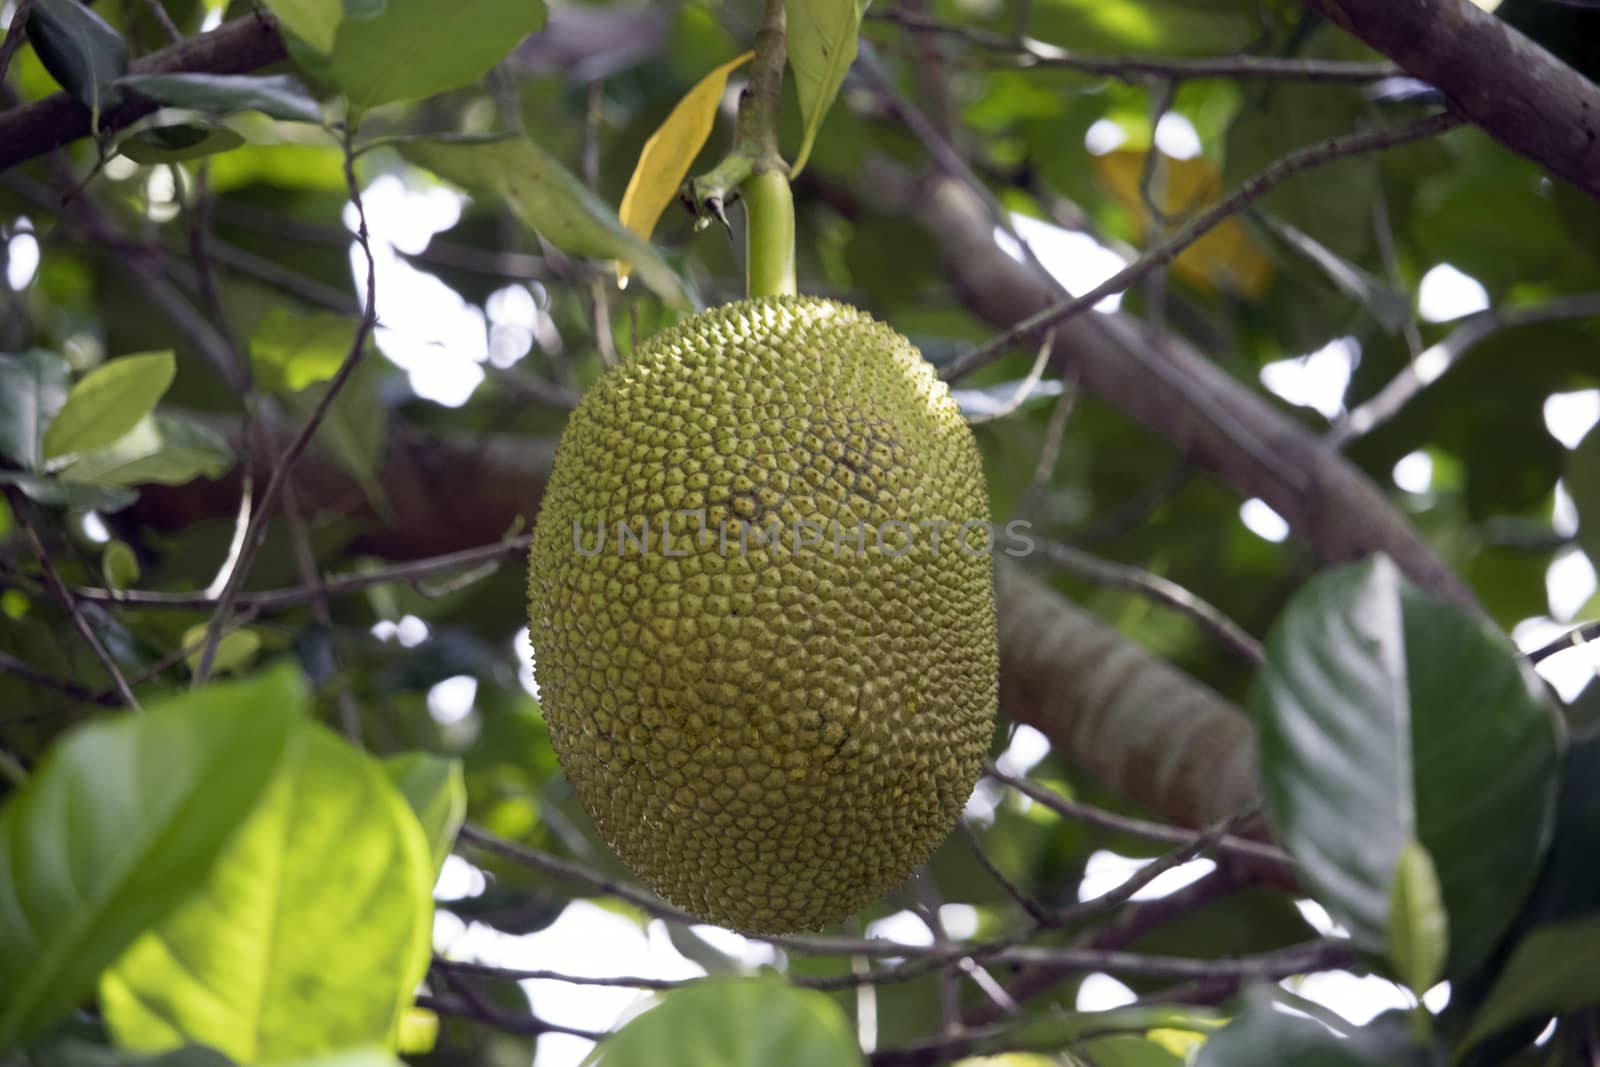 A single jackfruit on a branch and green leaves background by Khankeawsanan